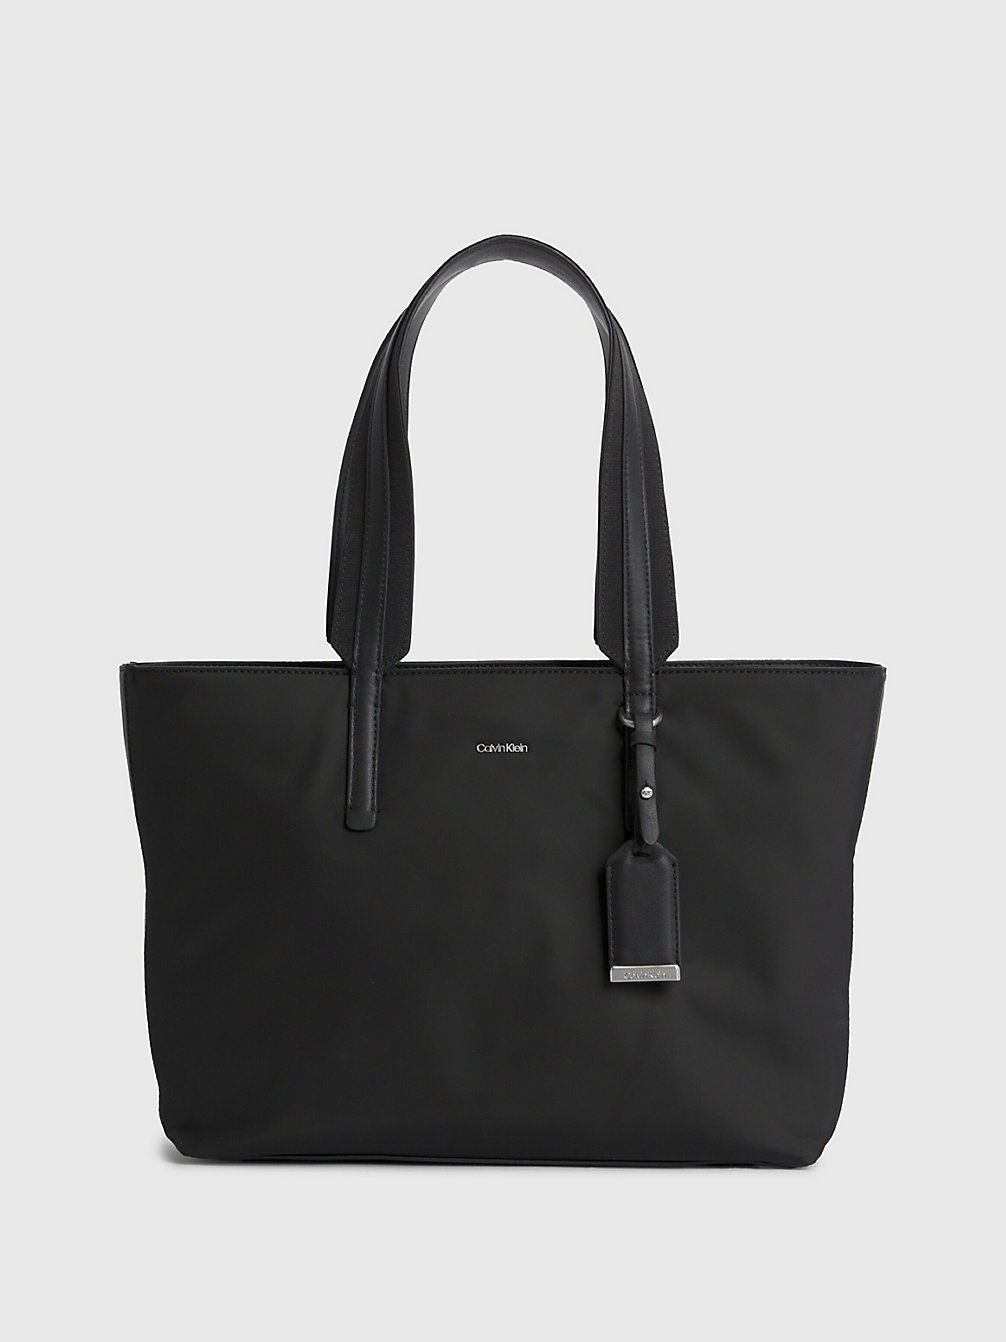 Women's Weekend Bags & Travel Bags | Calvin Klein®